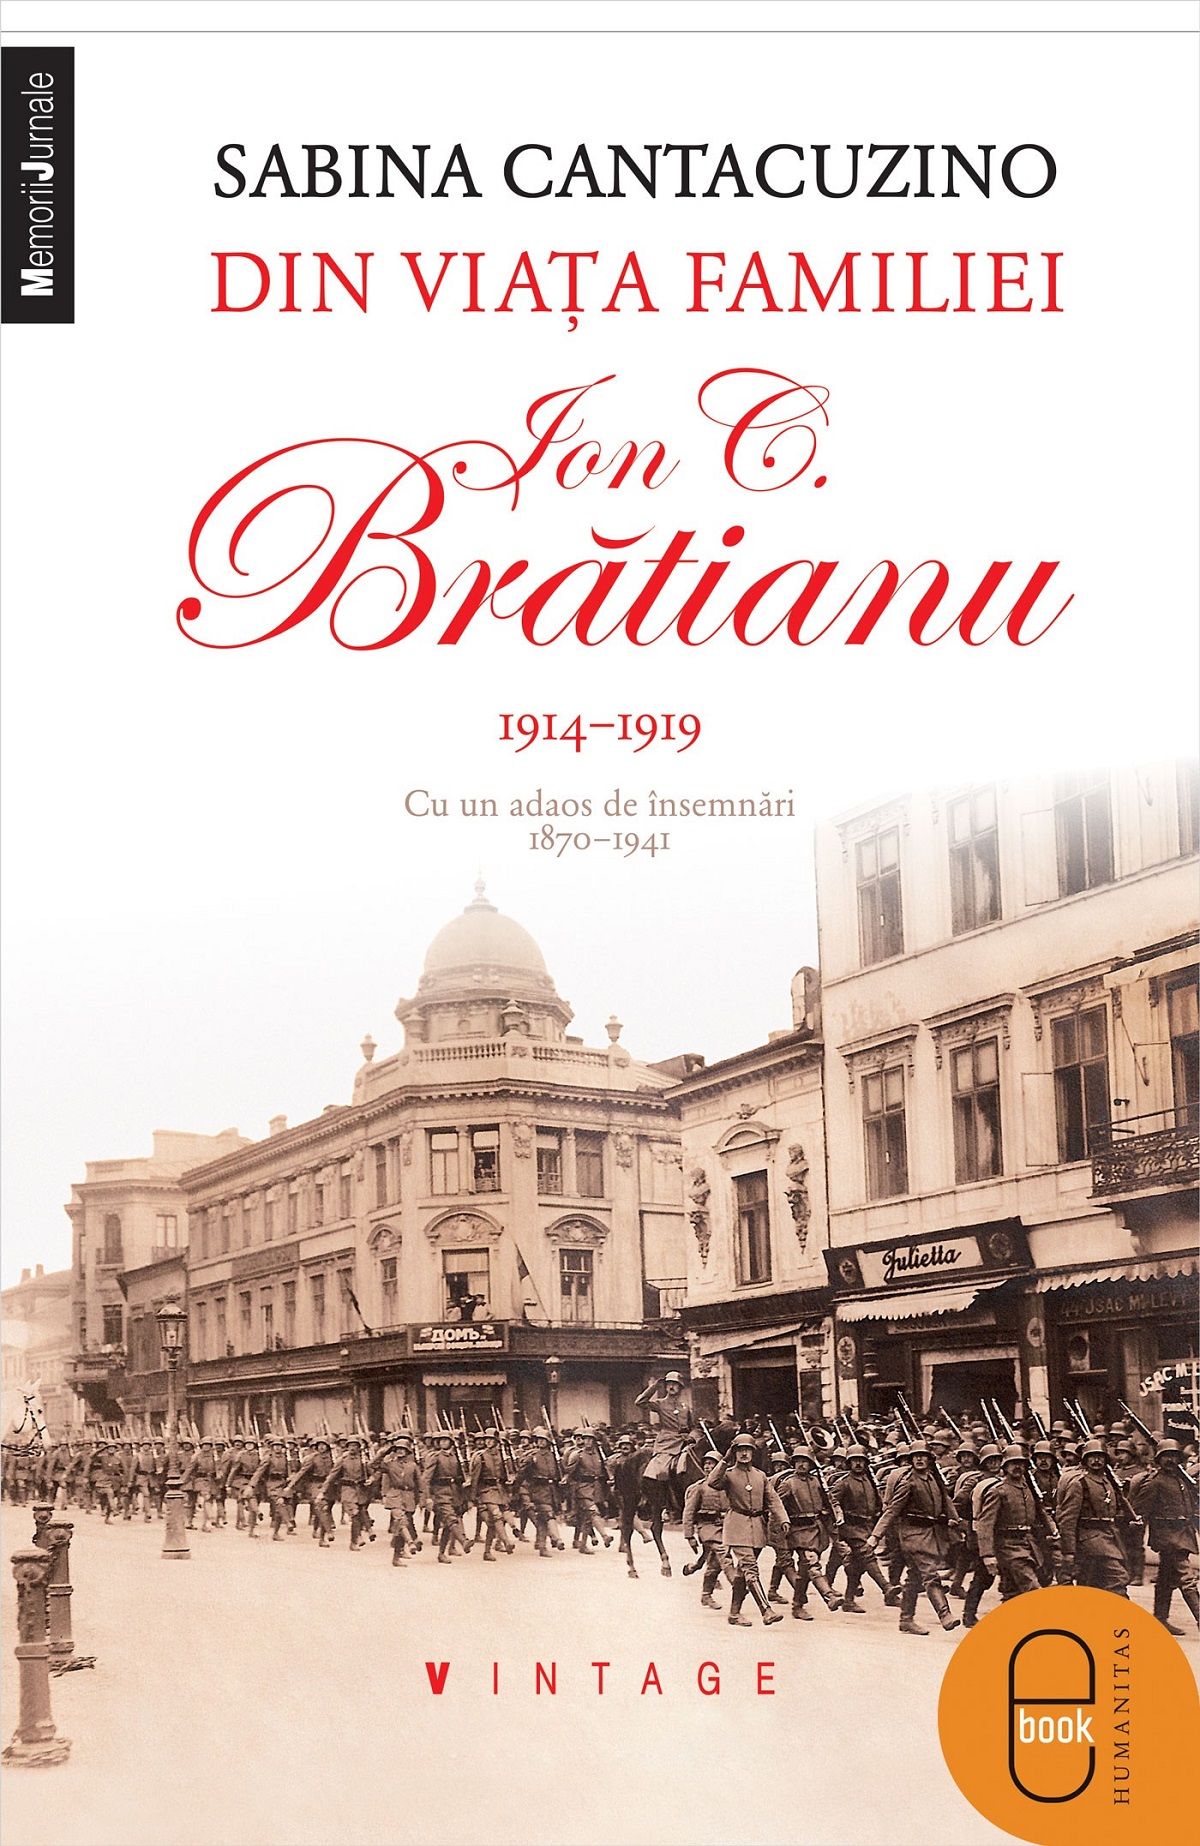 eBook Din viata familiei Ion C. Bratianu 1914-1919 - Sabina Cantacuzino